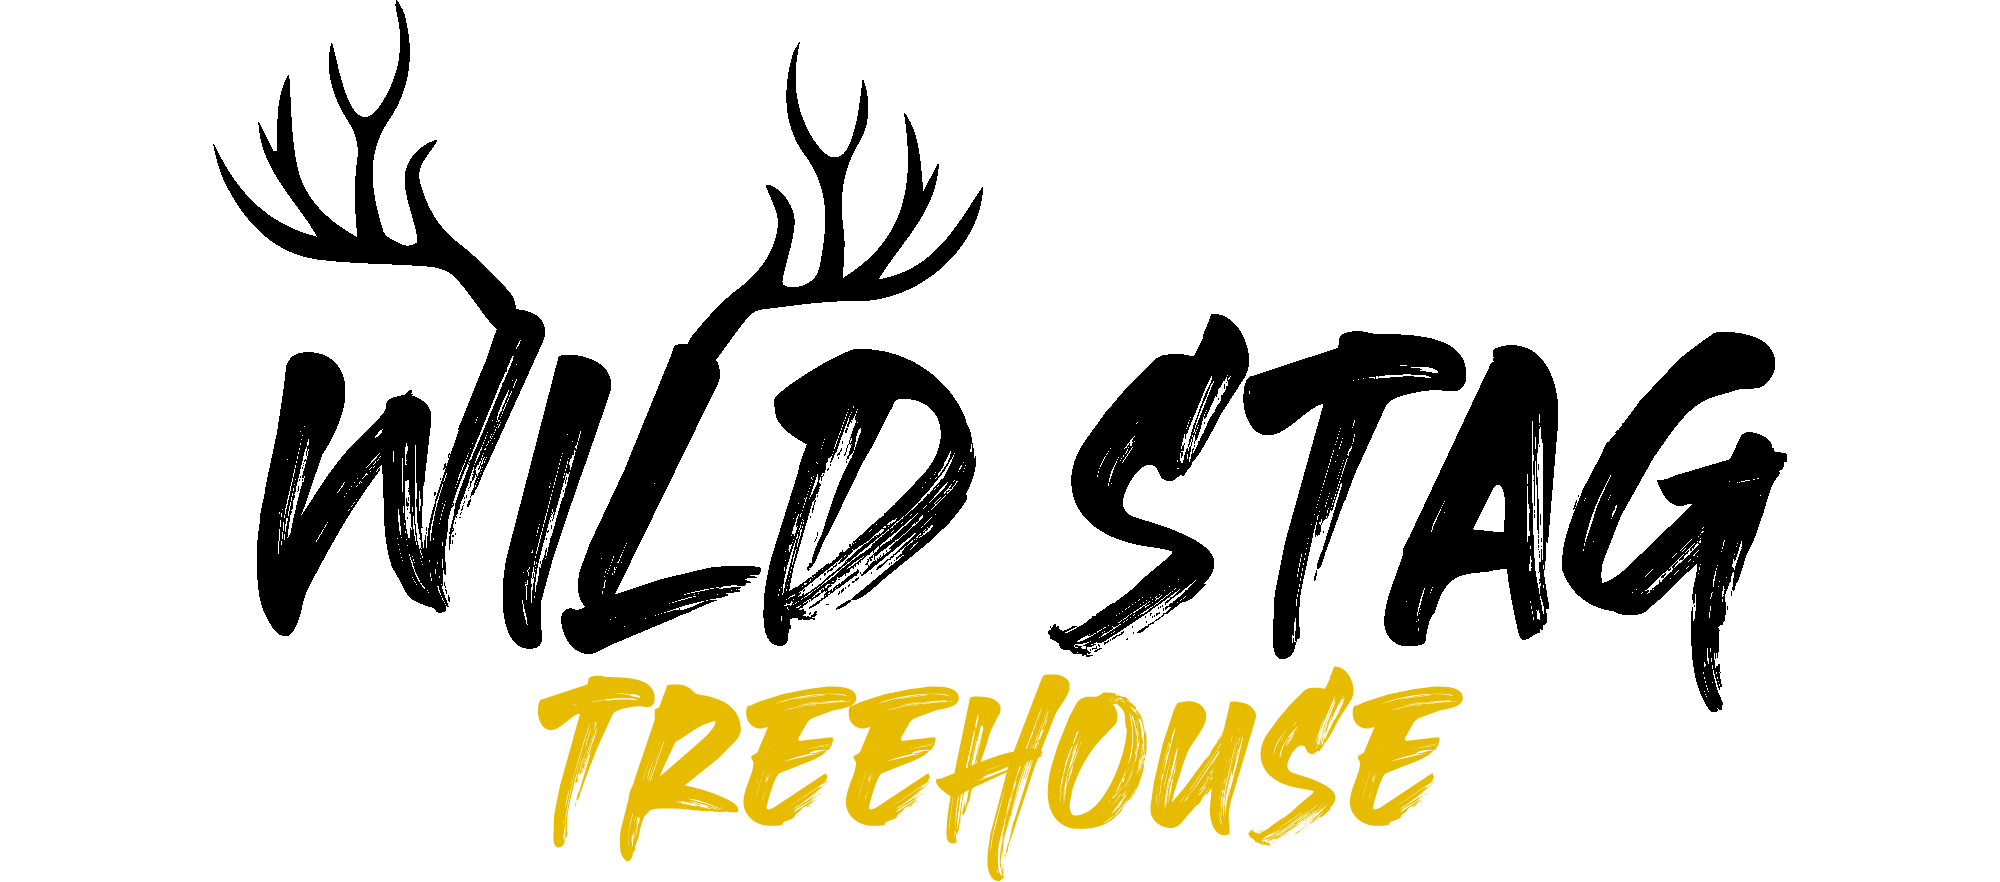 Wild Stag Treehouse